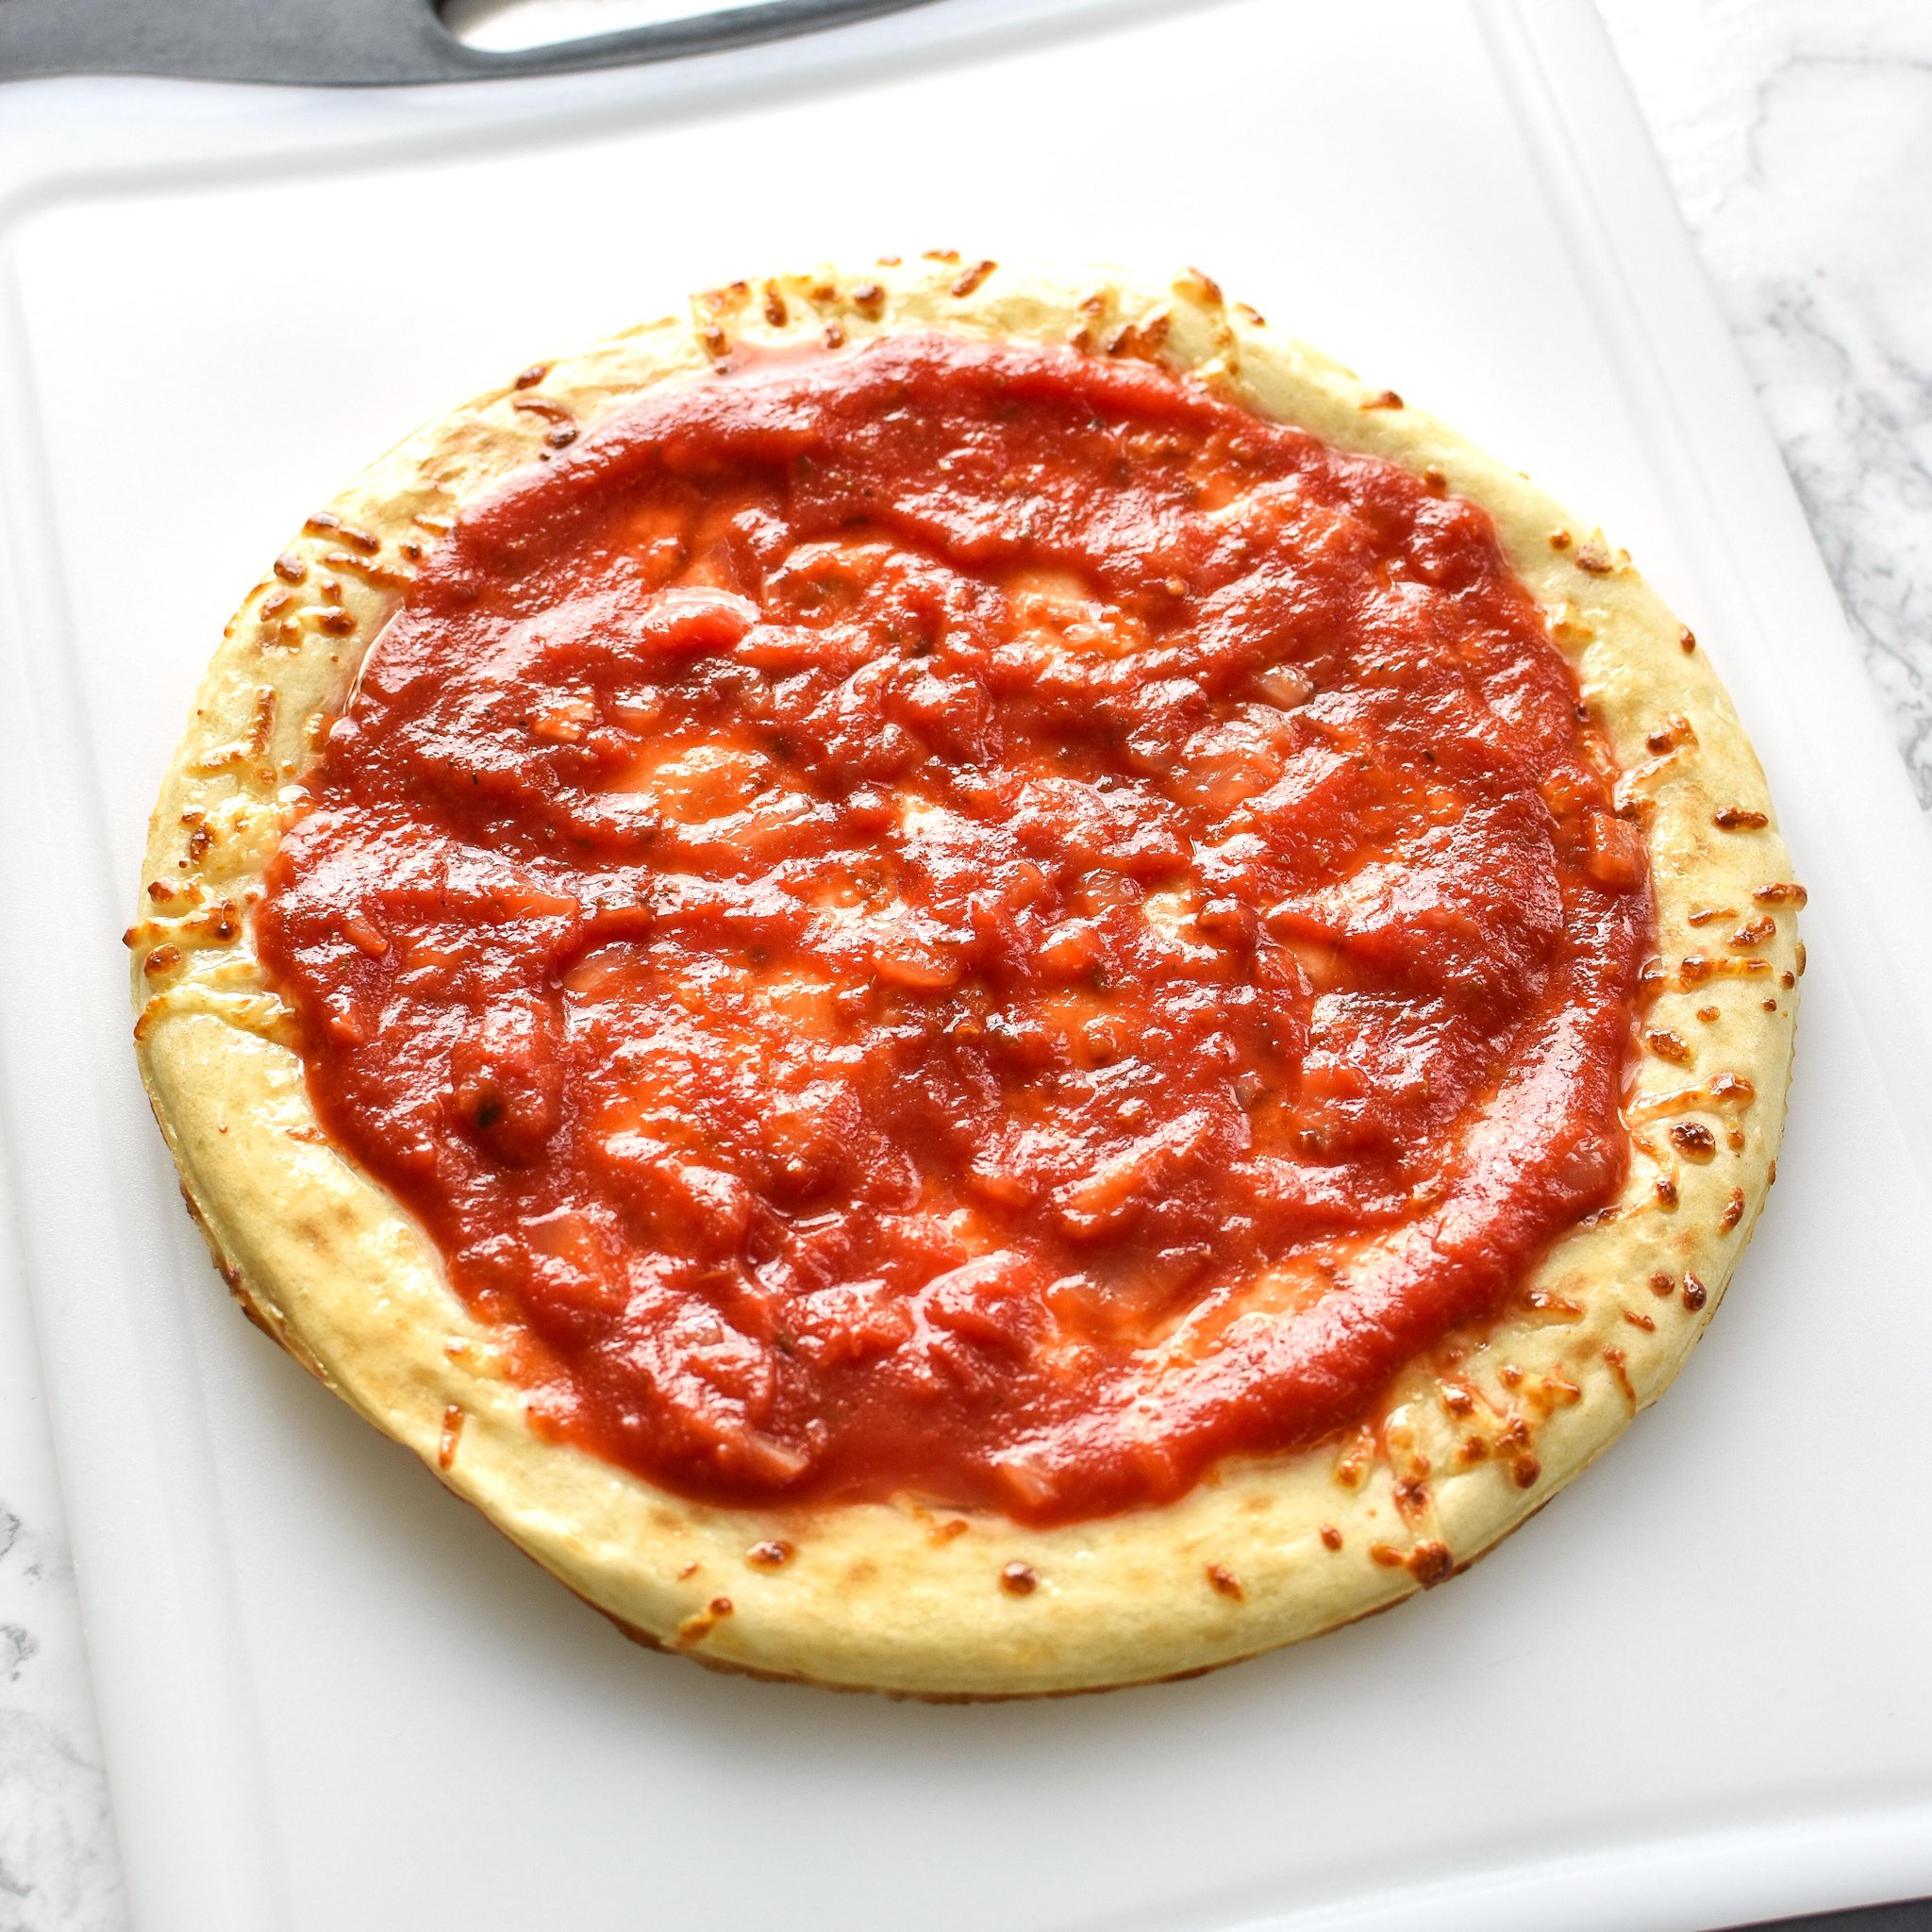 How to Make and Freeze Homemade Pizza Sauce - Big batch pizza sauce recipe to prep ahead so you can have homemade pizza sauce in 10 minutes! - ProjectMealPlan.com